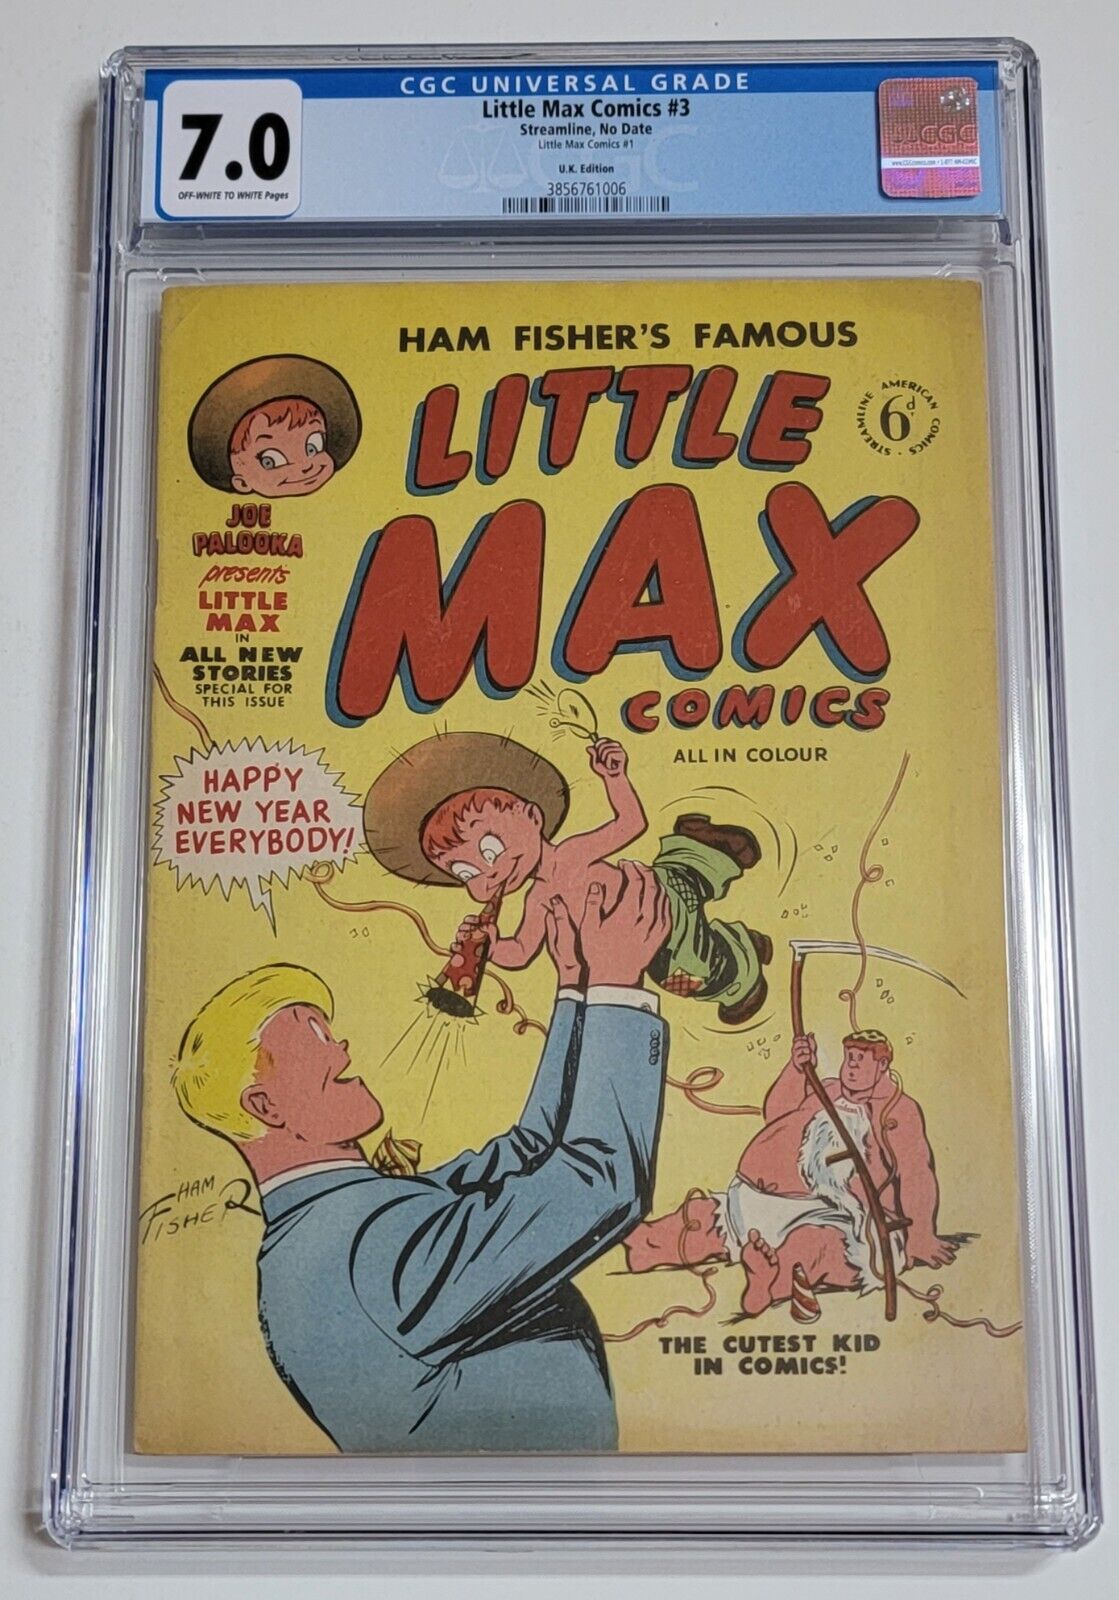 Little Max Comics #1 UK Edition CGC 7.0 (US Little Max #3) Golden Age Streamline